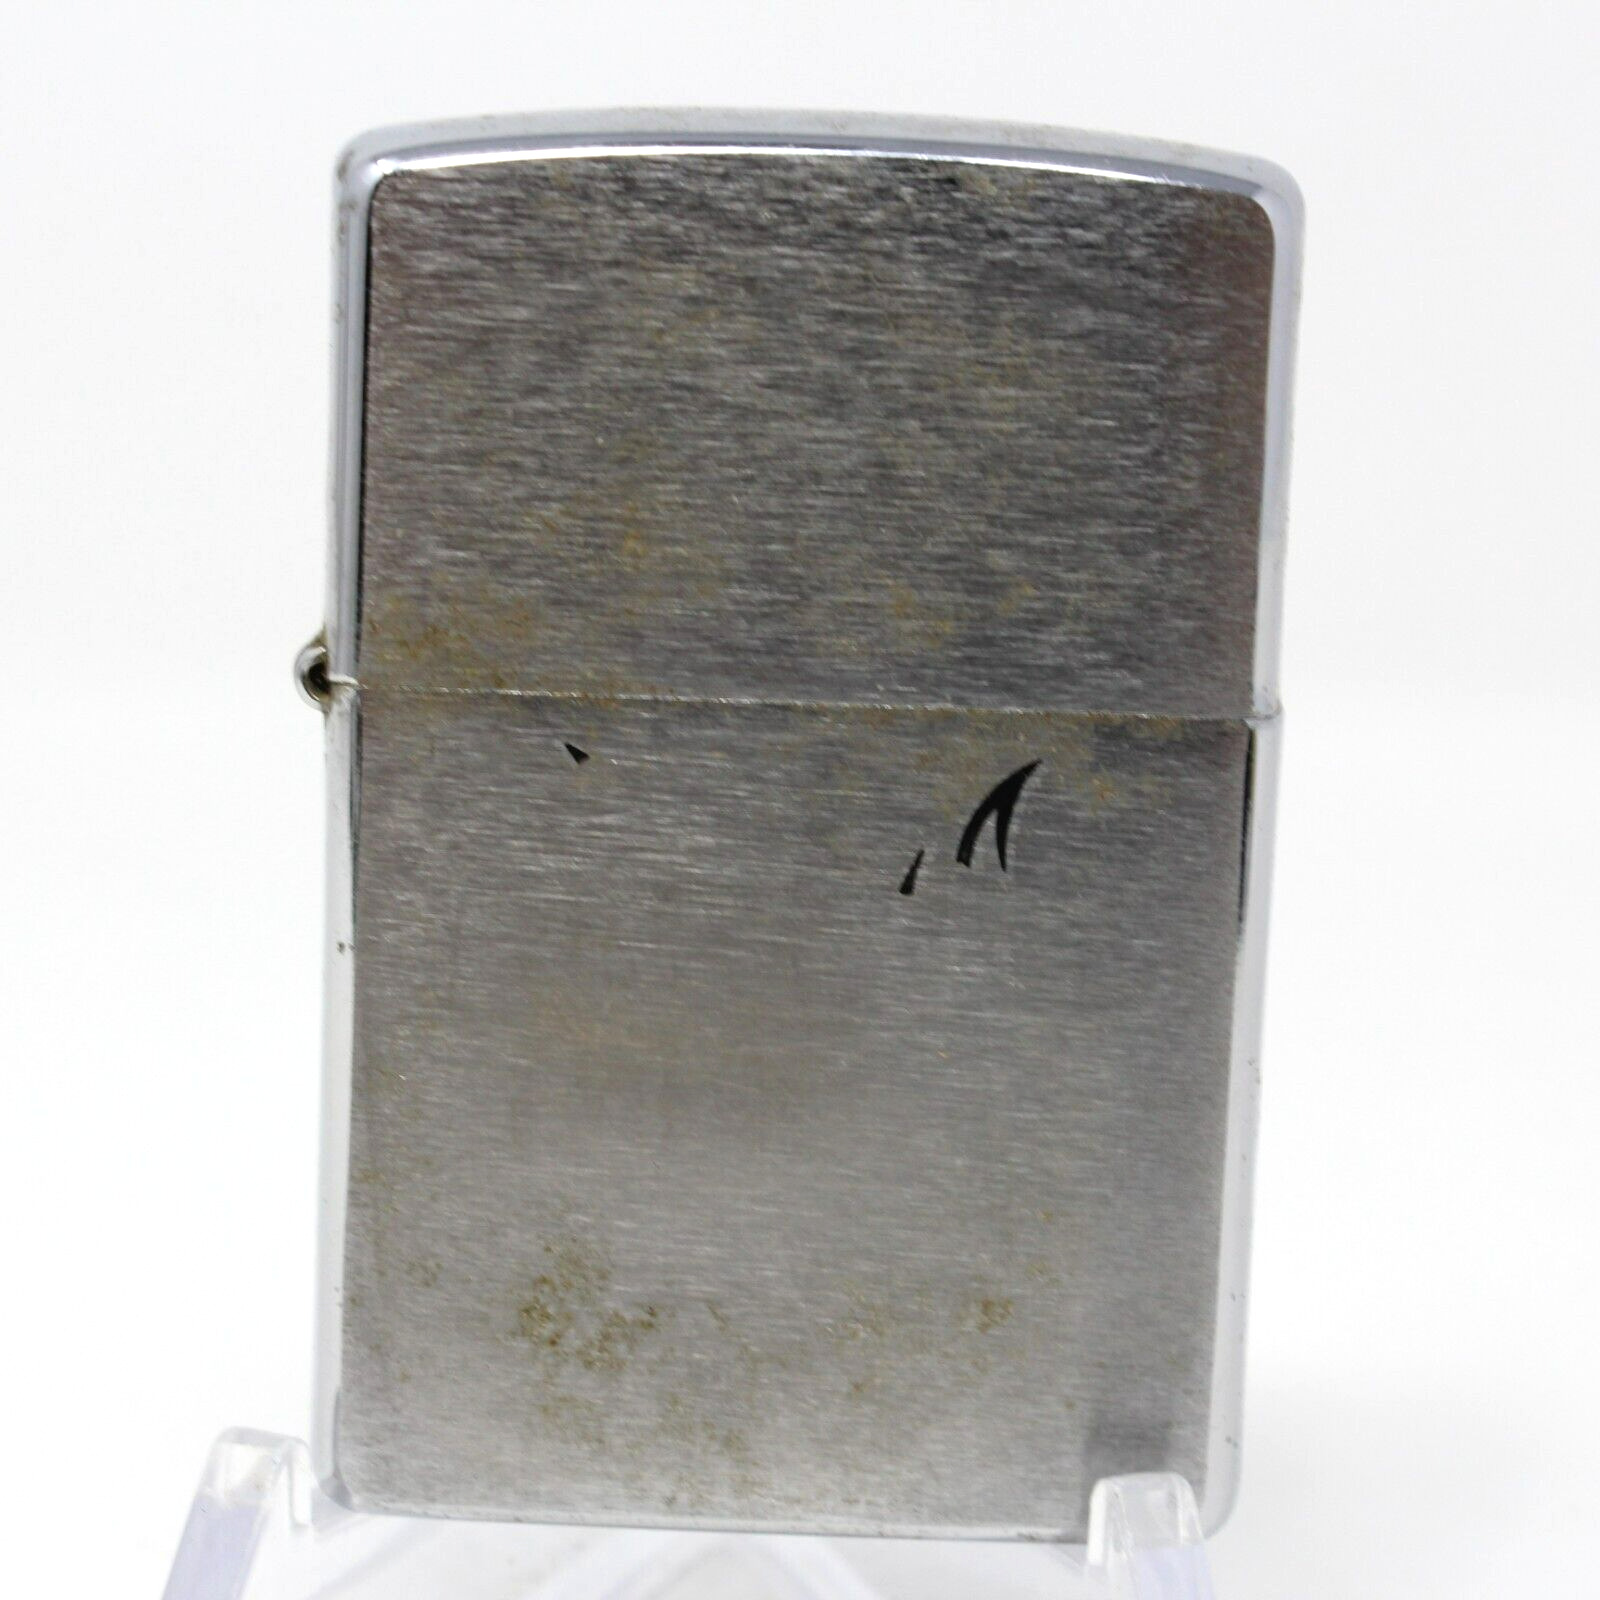 2009 Zippo Cigarette Lighter - Plain Brushed Chrome - A-09